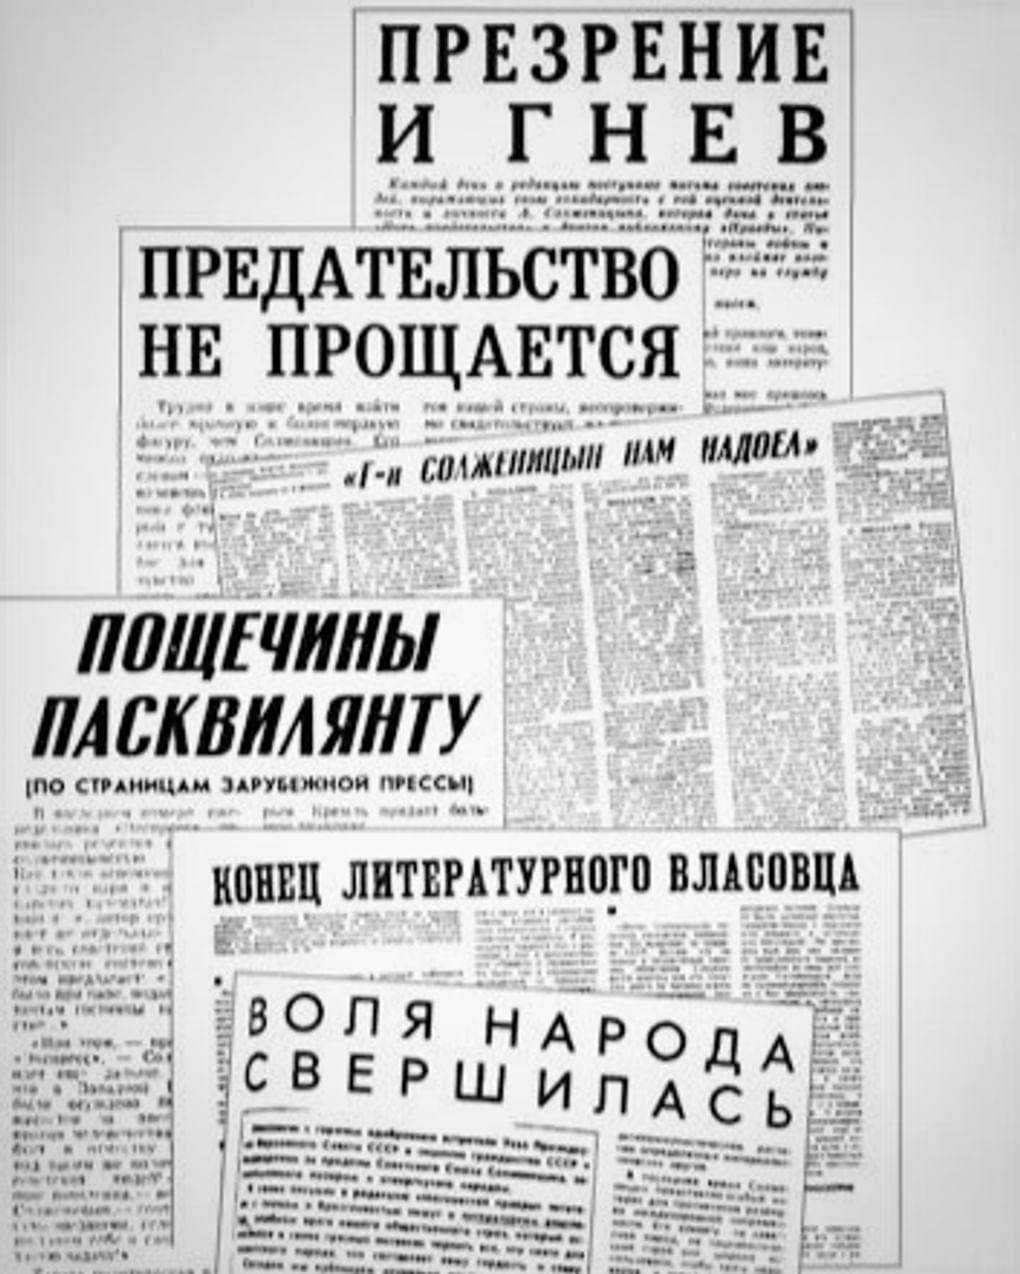 Газетная травля января-февраля 1974. Изображение: solzhenitsyn.ru